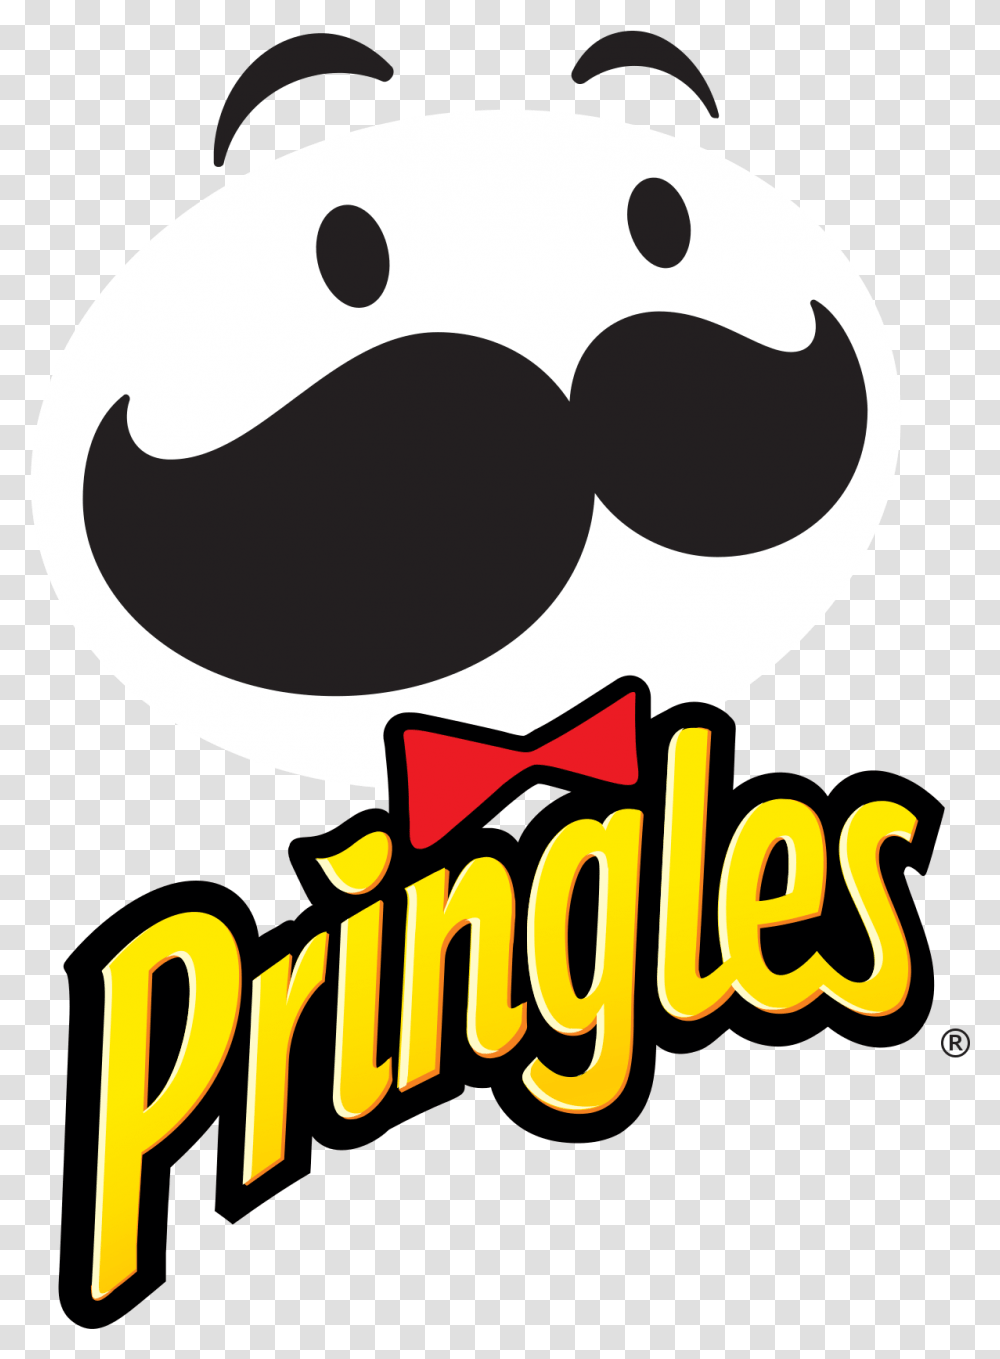 Pringles Pringles New Logo, Label, Text, Sticker, Mustache Transparent Png